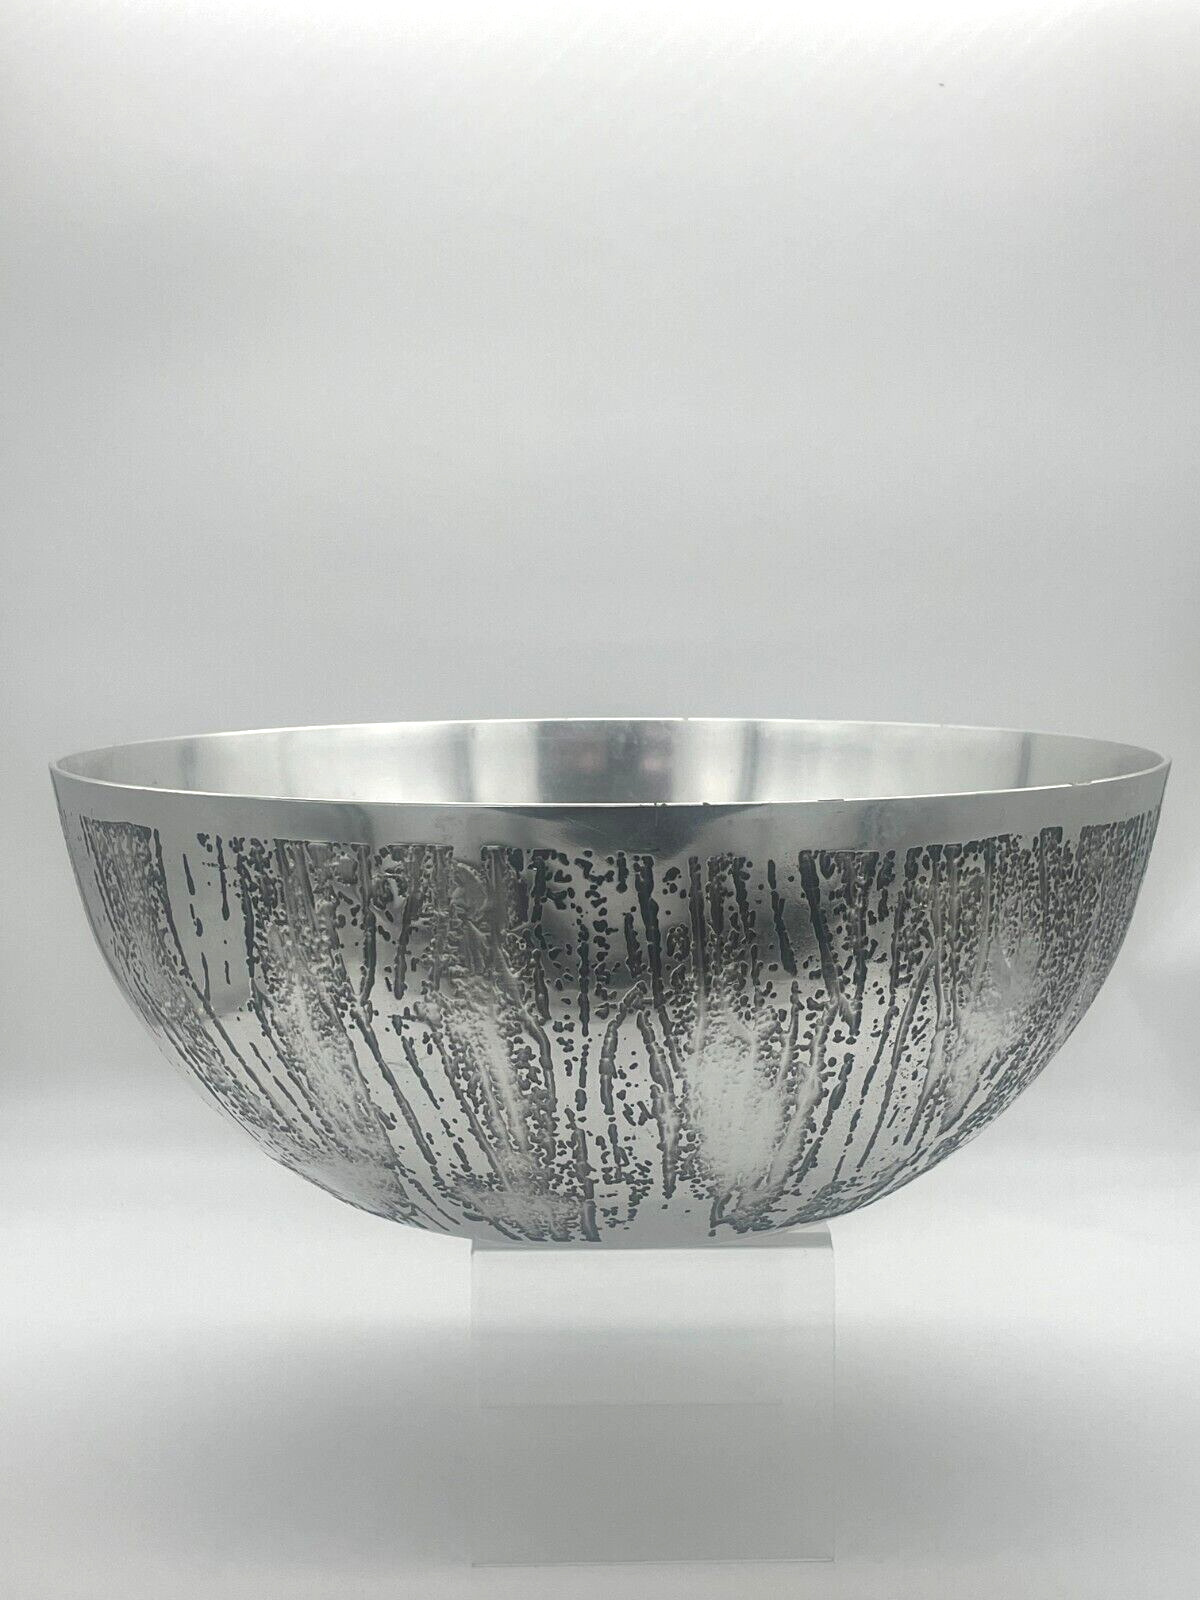 Large Vintage Aluminium Brutalist Etched Bowl, Rhonnina Design, Stephen Daly?